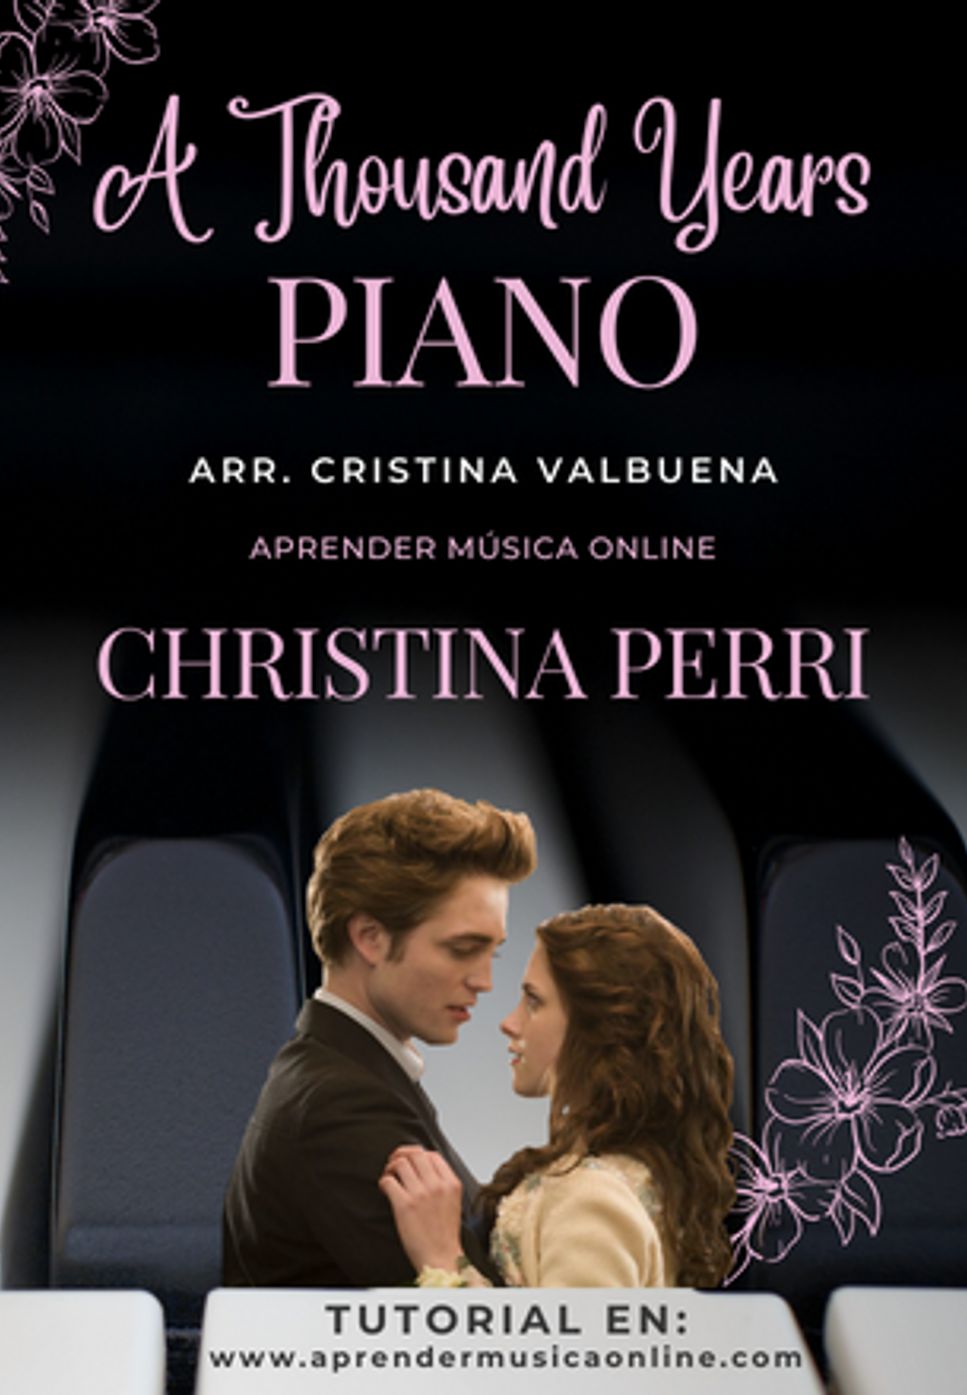 Christina Perri - A Thousand Years by Cristina Valbuena